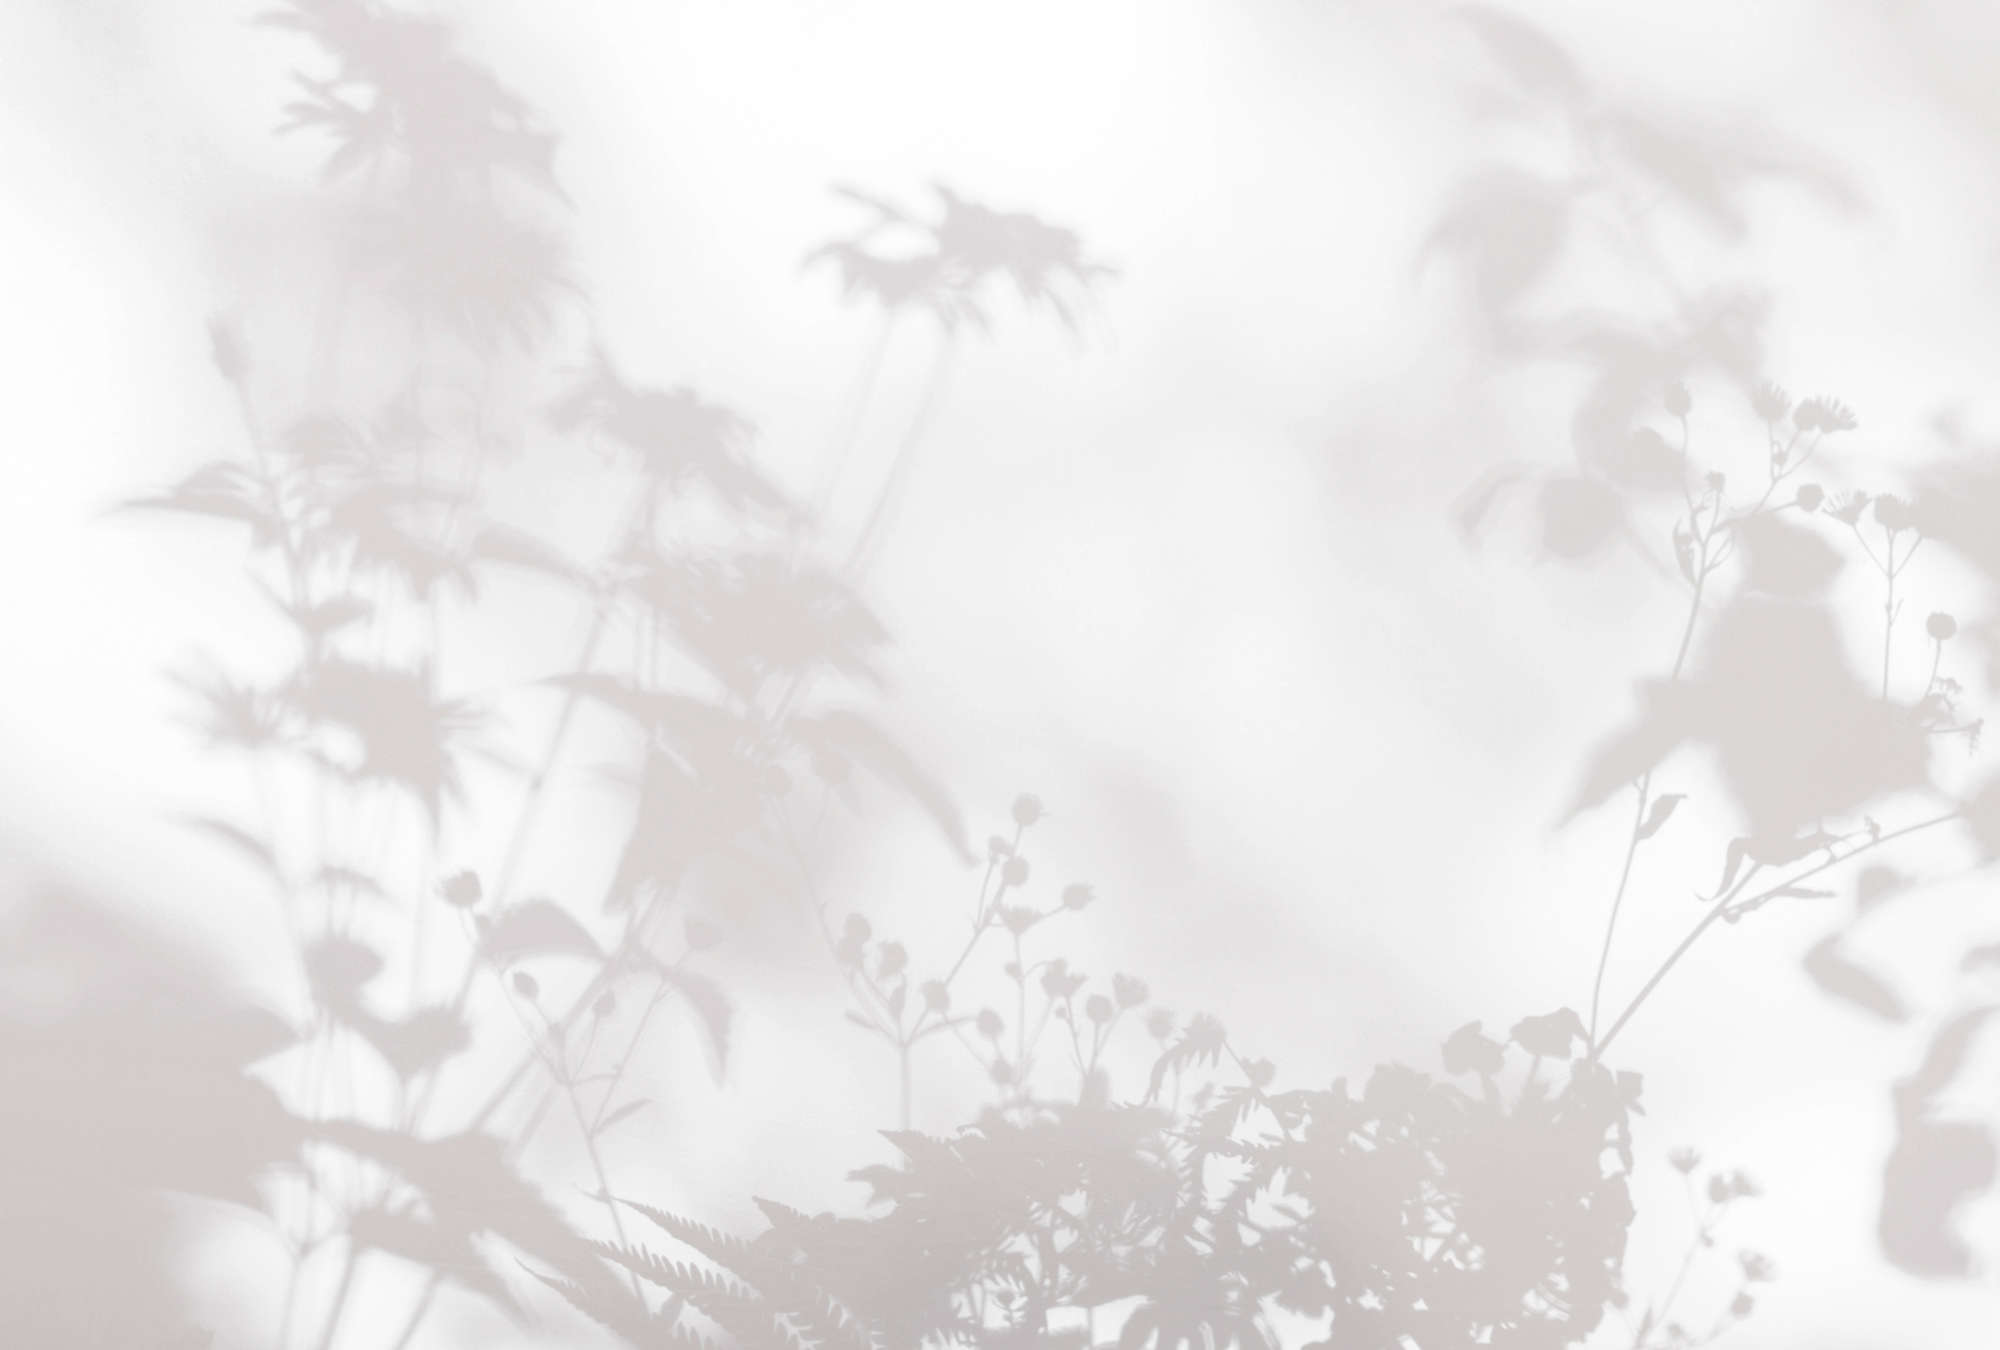             Sala de Sombras 2 - Papel Pintado Naturaleza Gris y Blanco, Diseño Descolorido
        